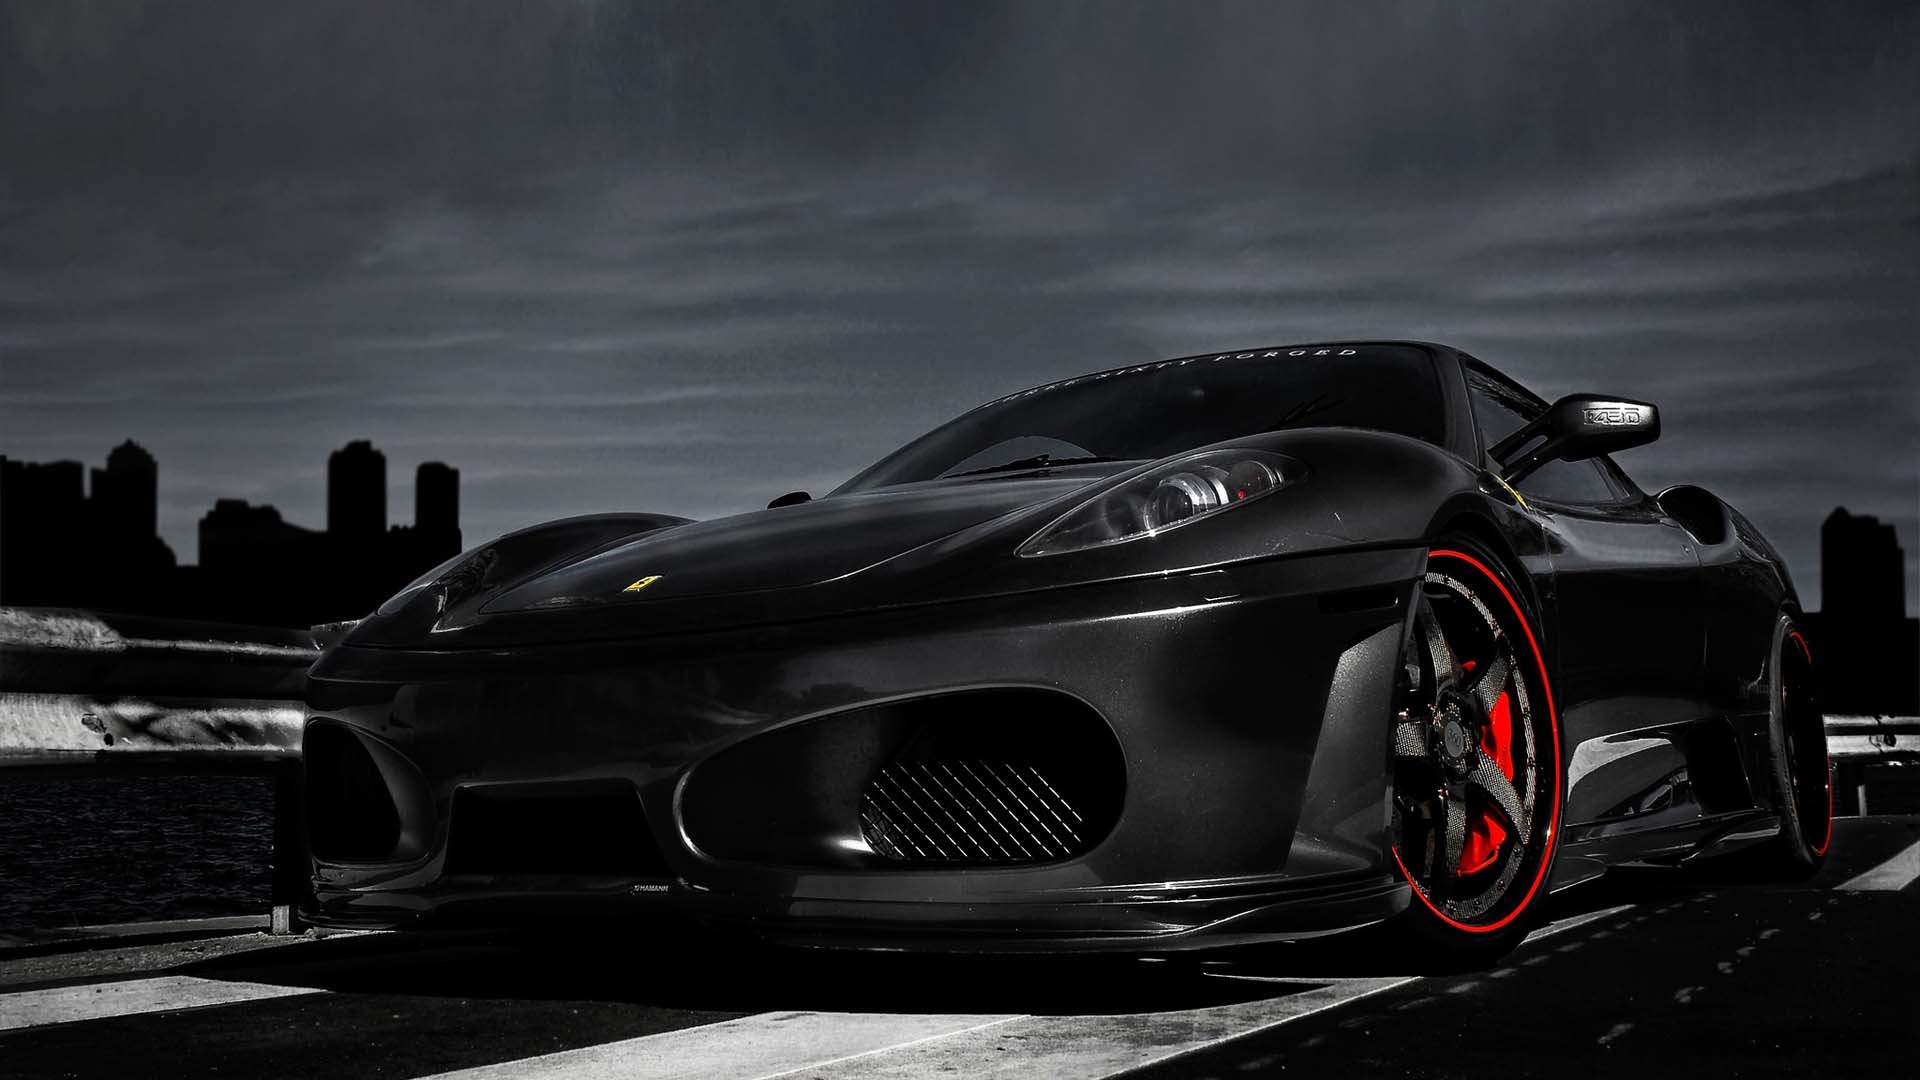 Black Ferrari Wallpaper HD In Cars Imageci